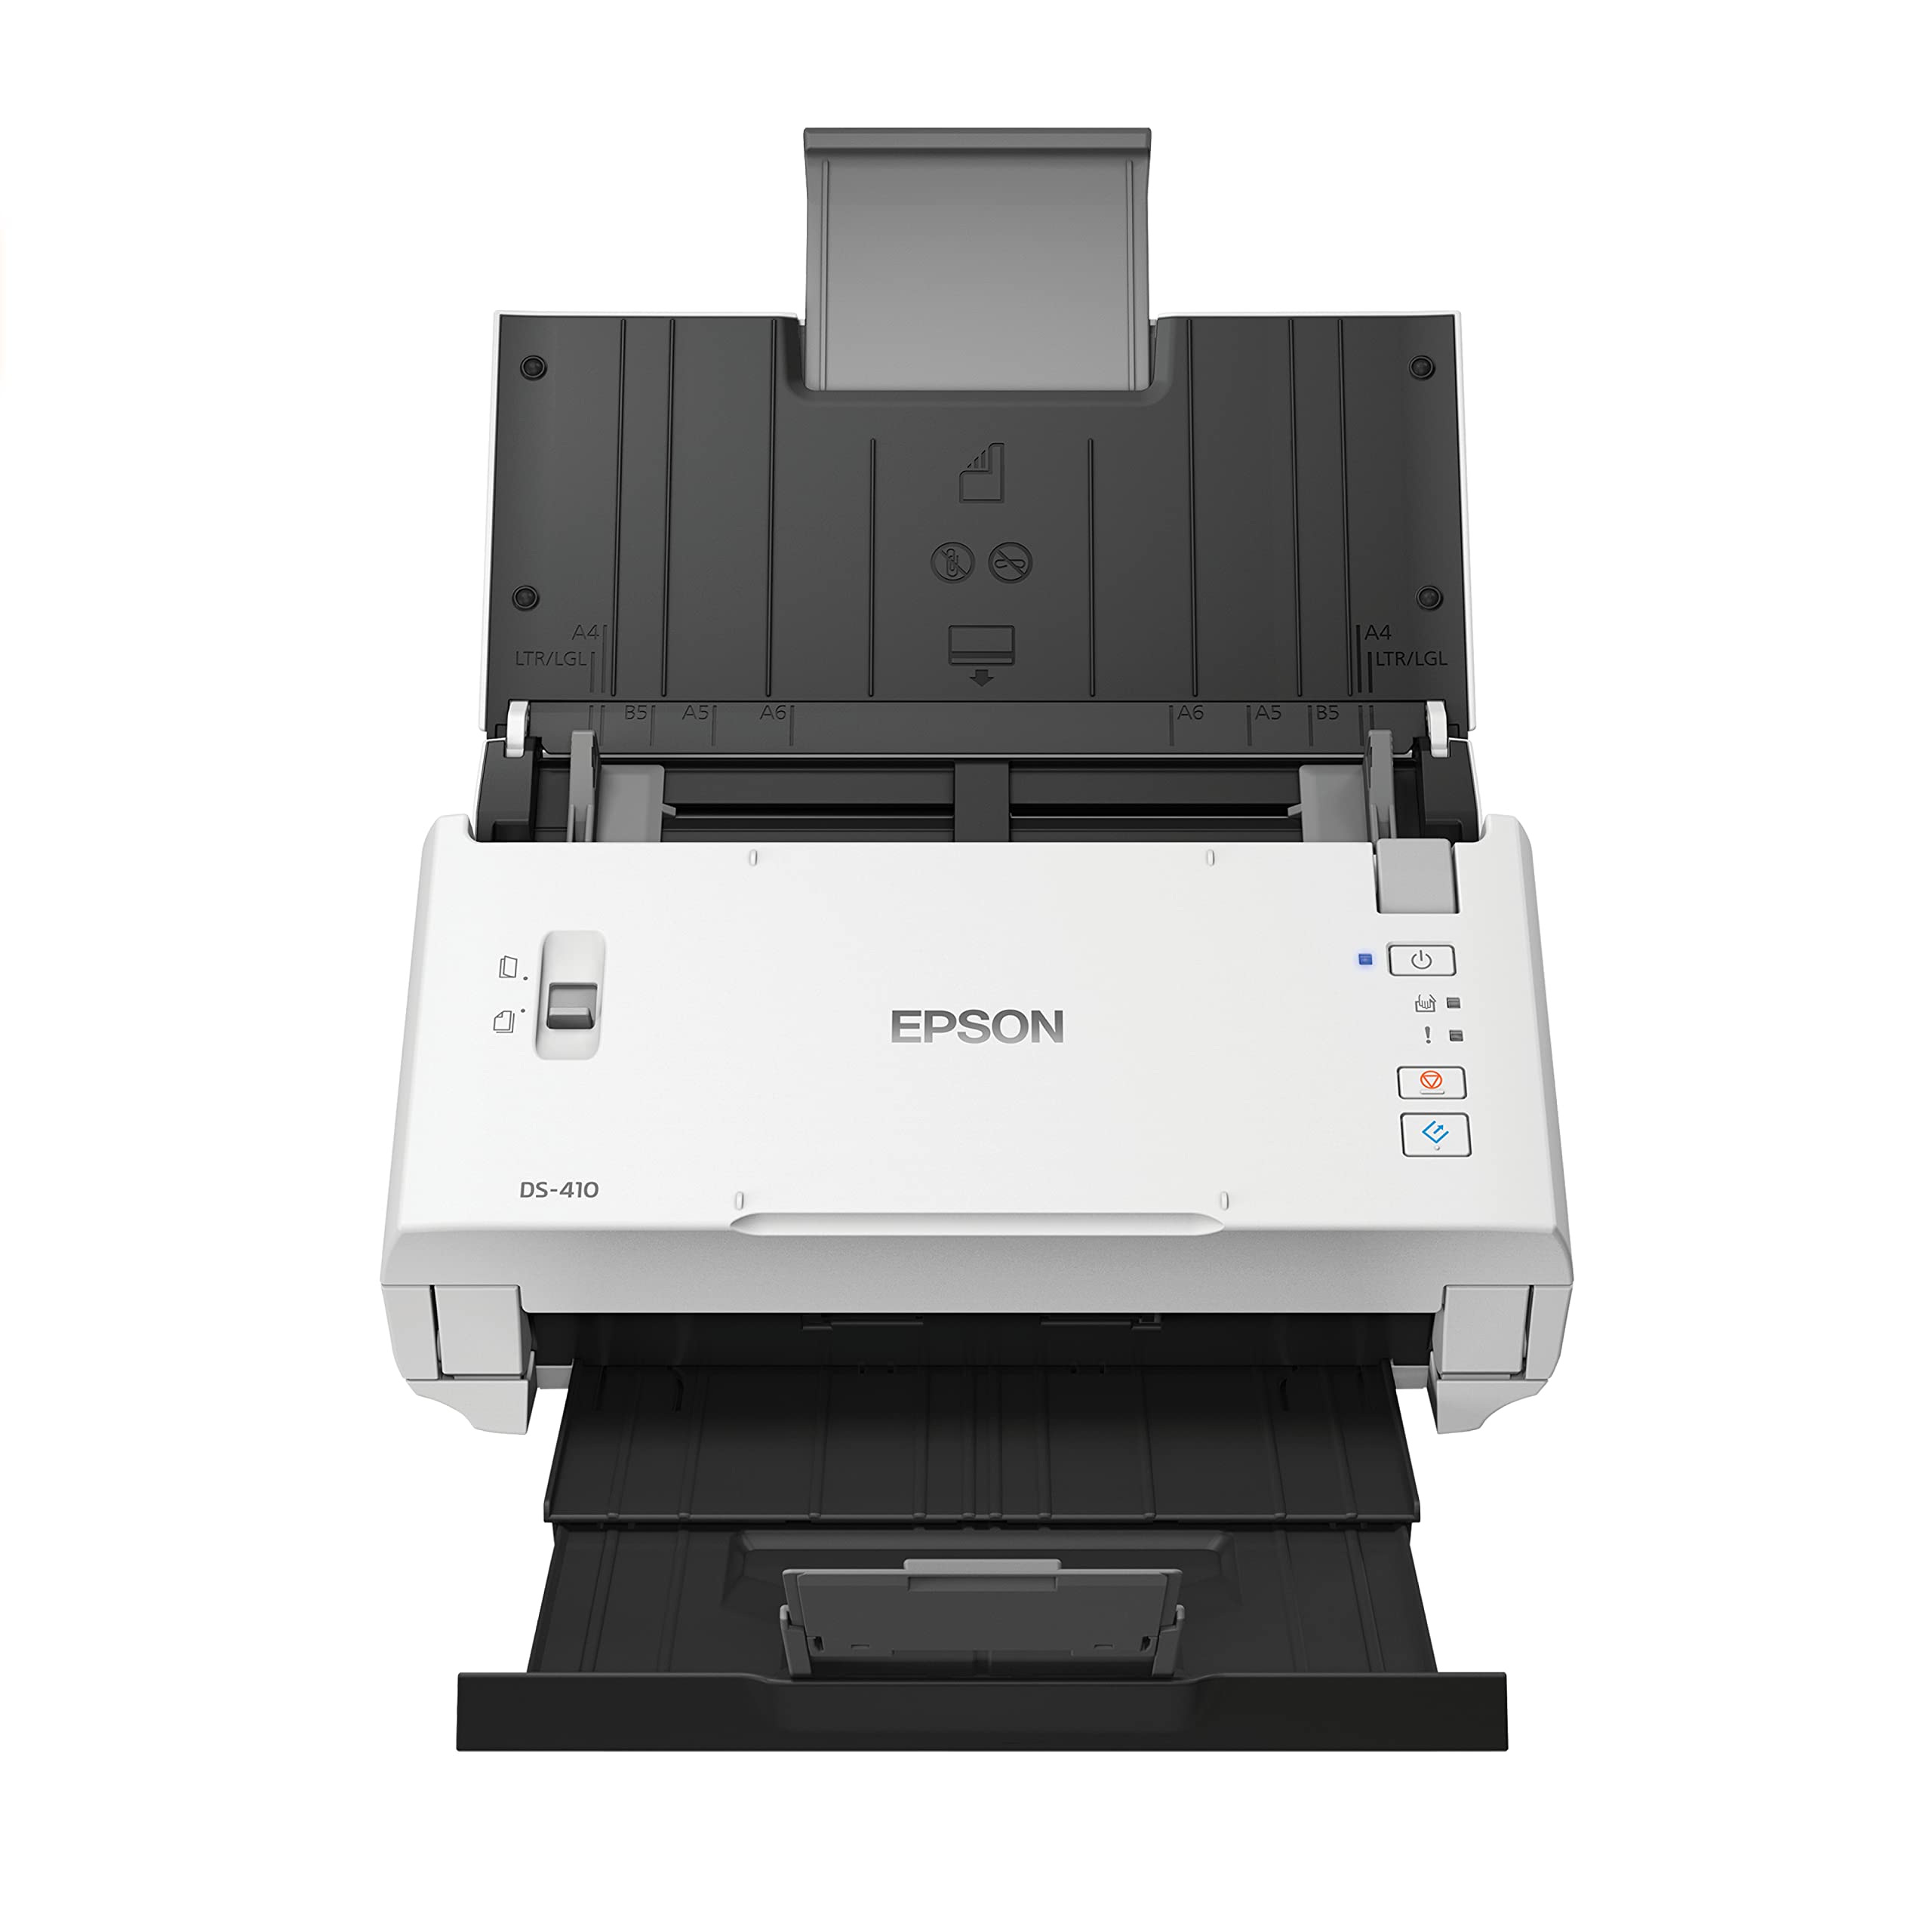 Epson DS-410 ماسح المستندات